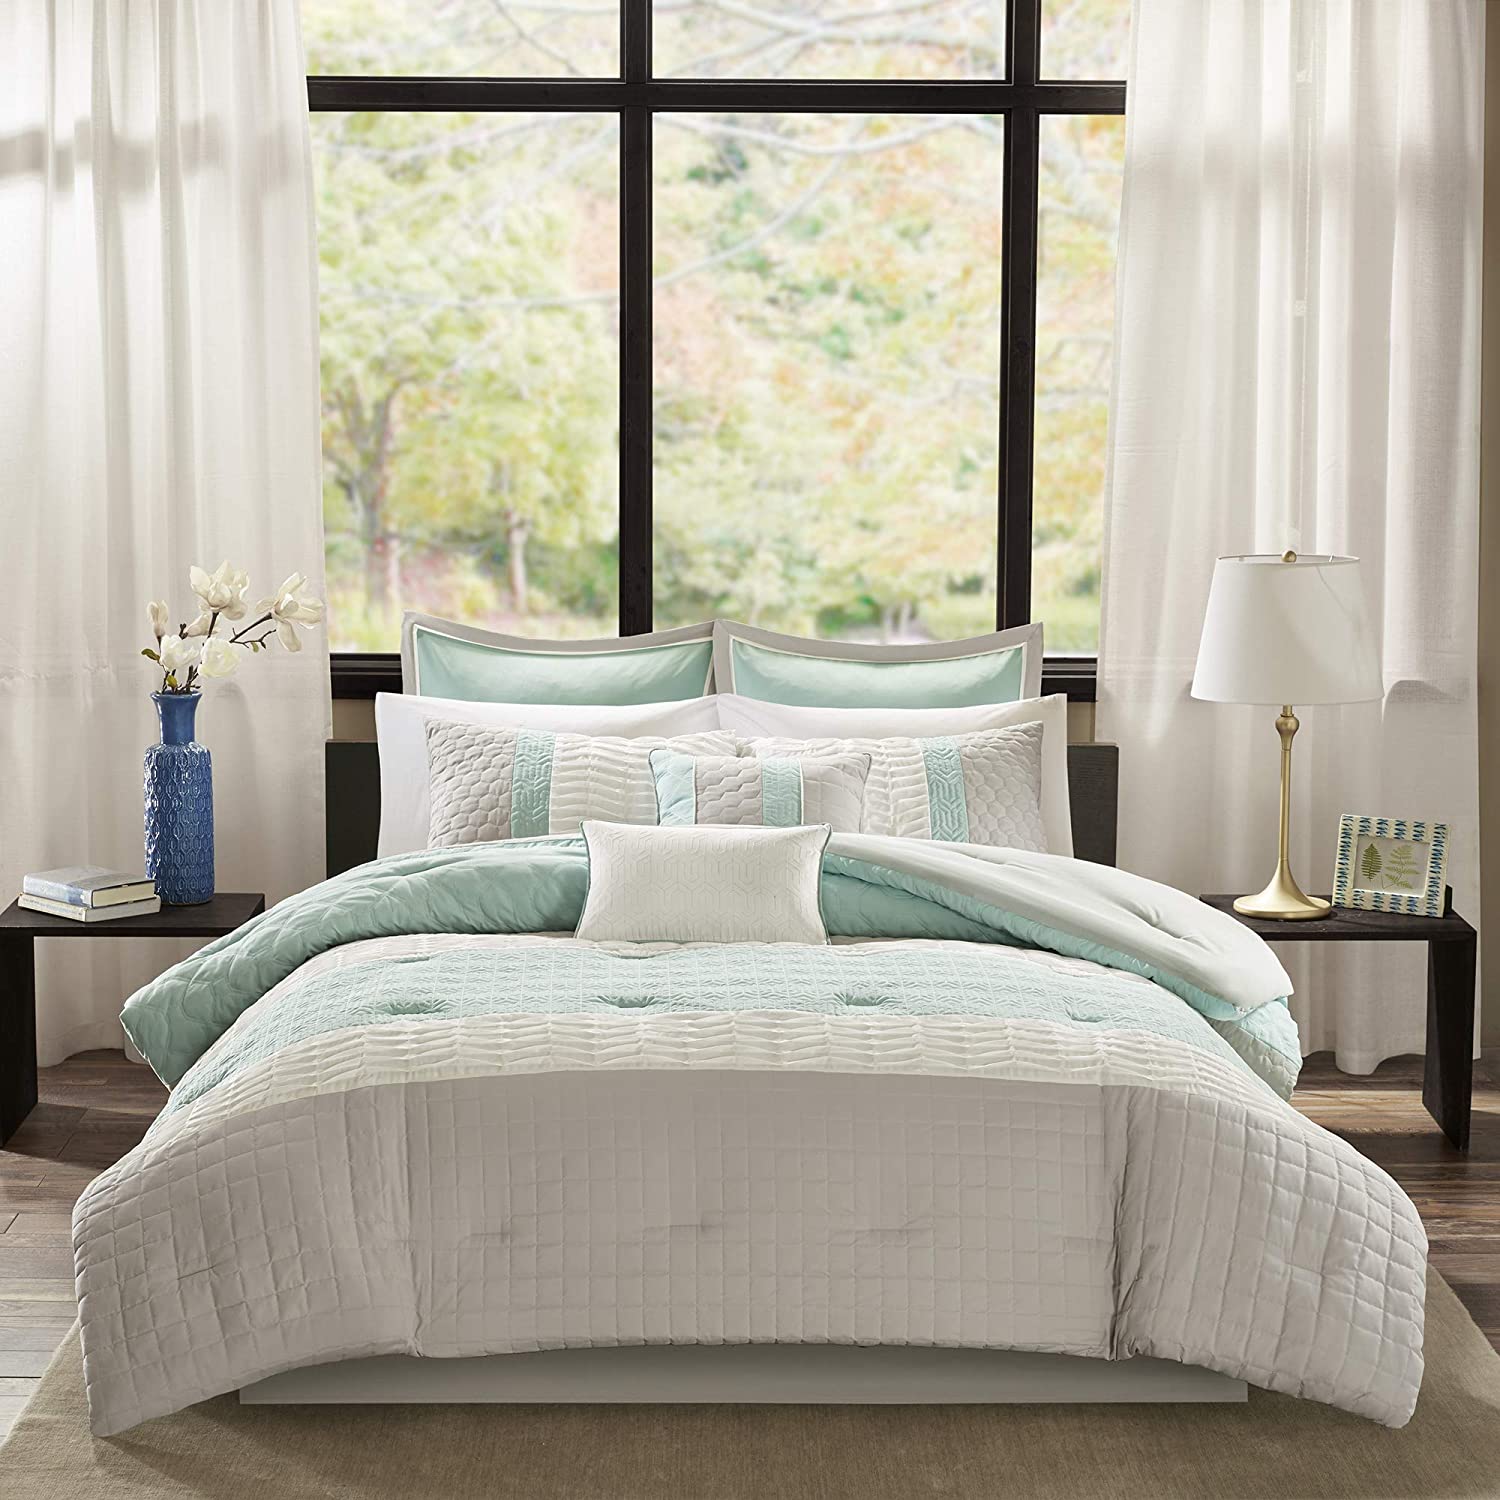 Madison Park Roslynn King Size Bed Comforter Set Bed in A Bag - Aqua, Striped ‚Äì 8 Pieces Bedding Sets ‚Äì Microcell Bedroom Comforters